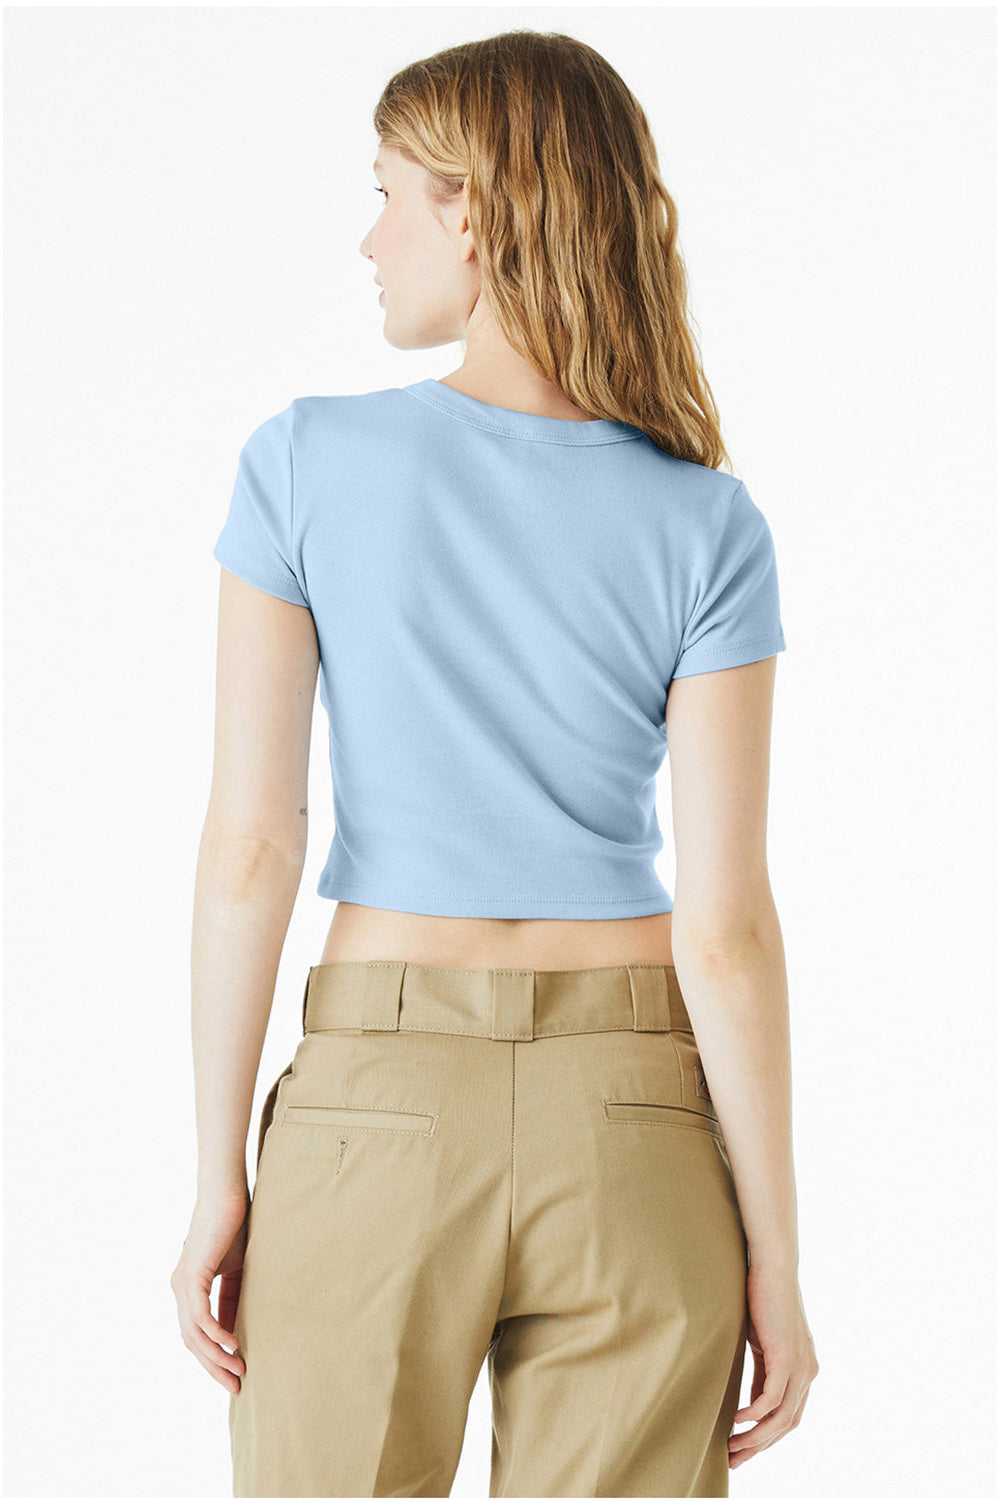 Bella + Canvas 1010BE Womens Micro Ribbed Short Sleeve Crewneck Baby T-Shirt Baby Blue Model Back